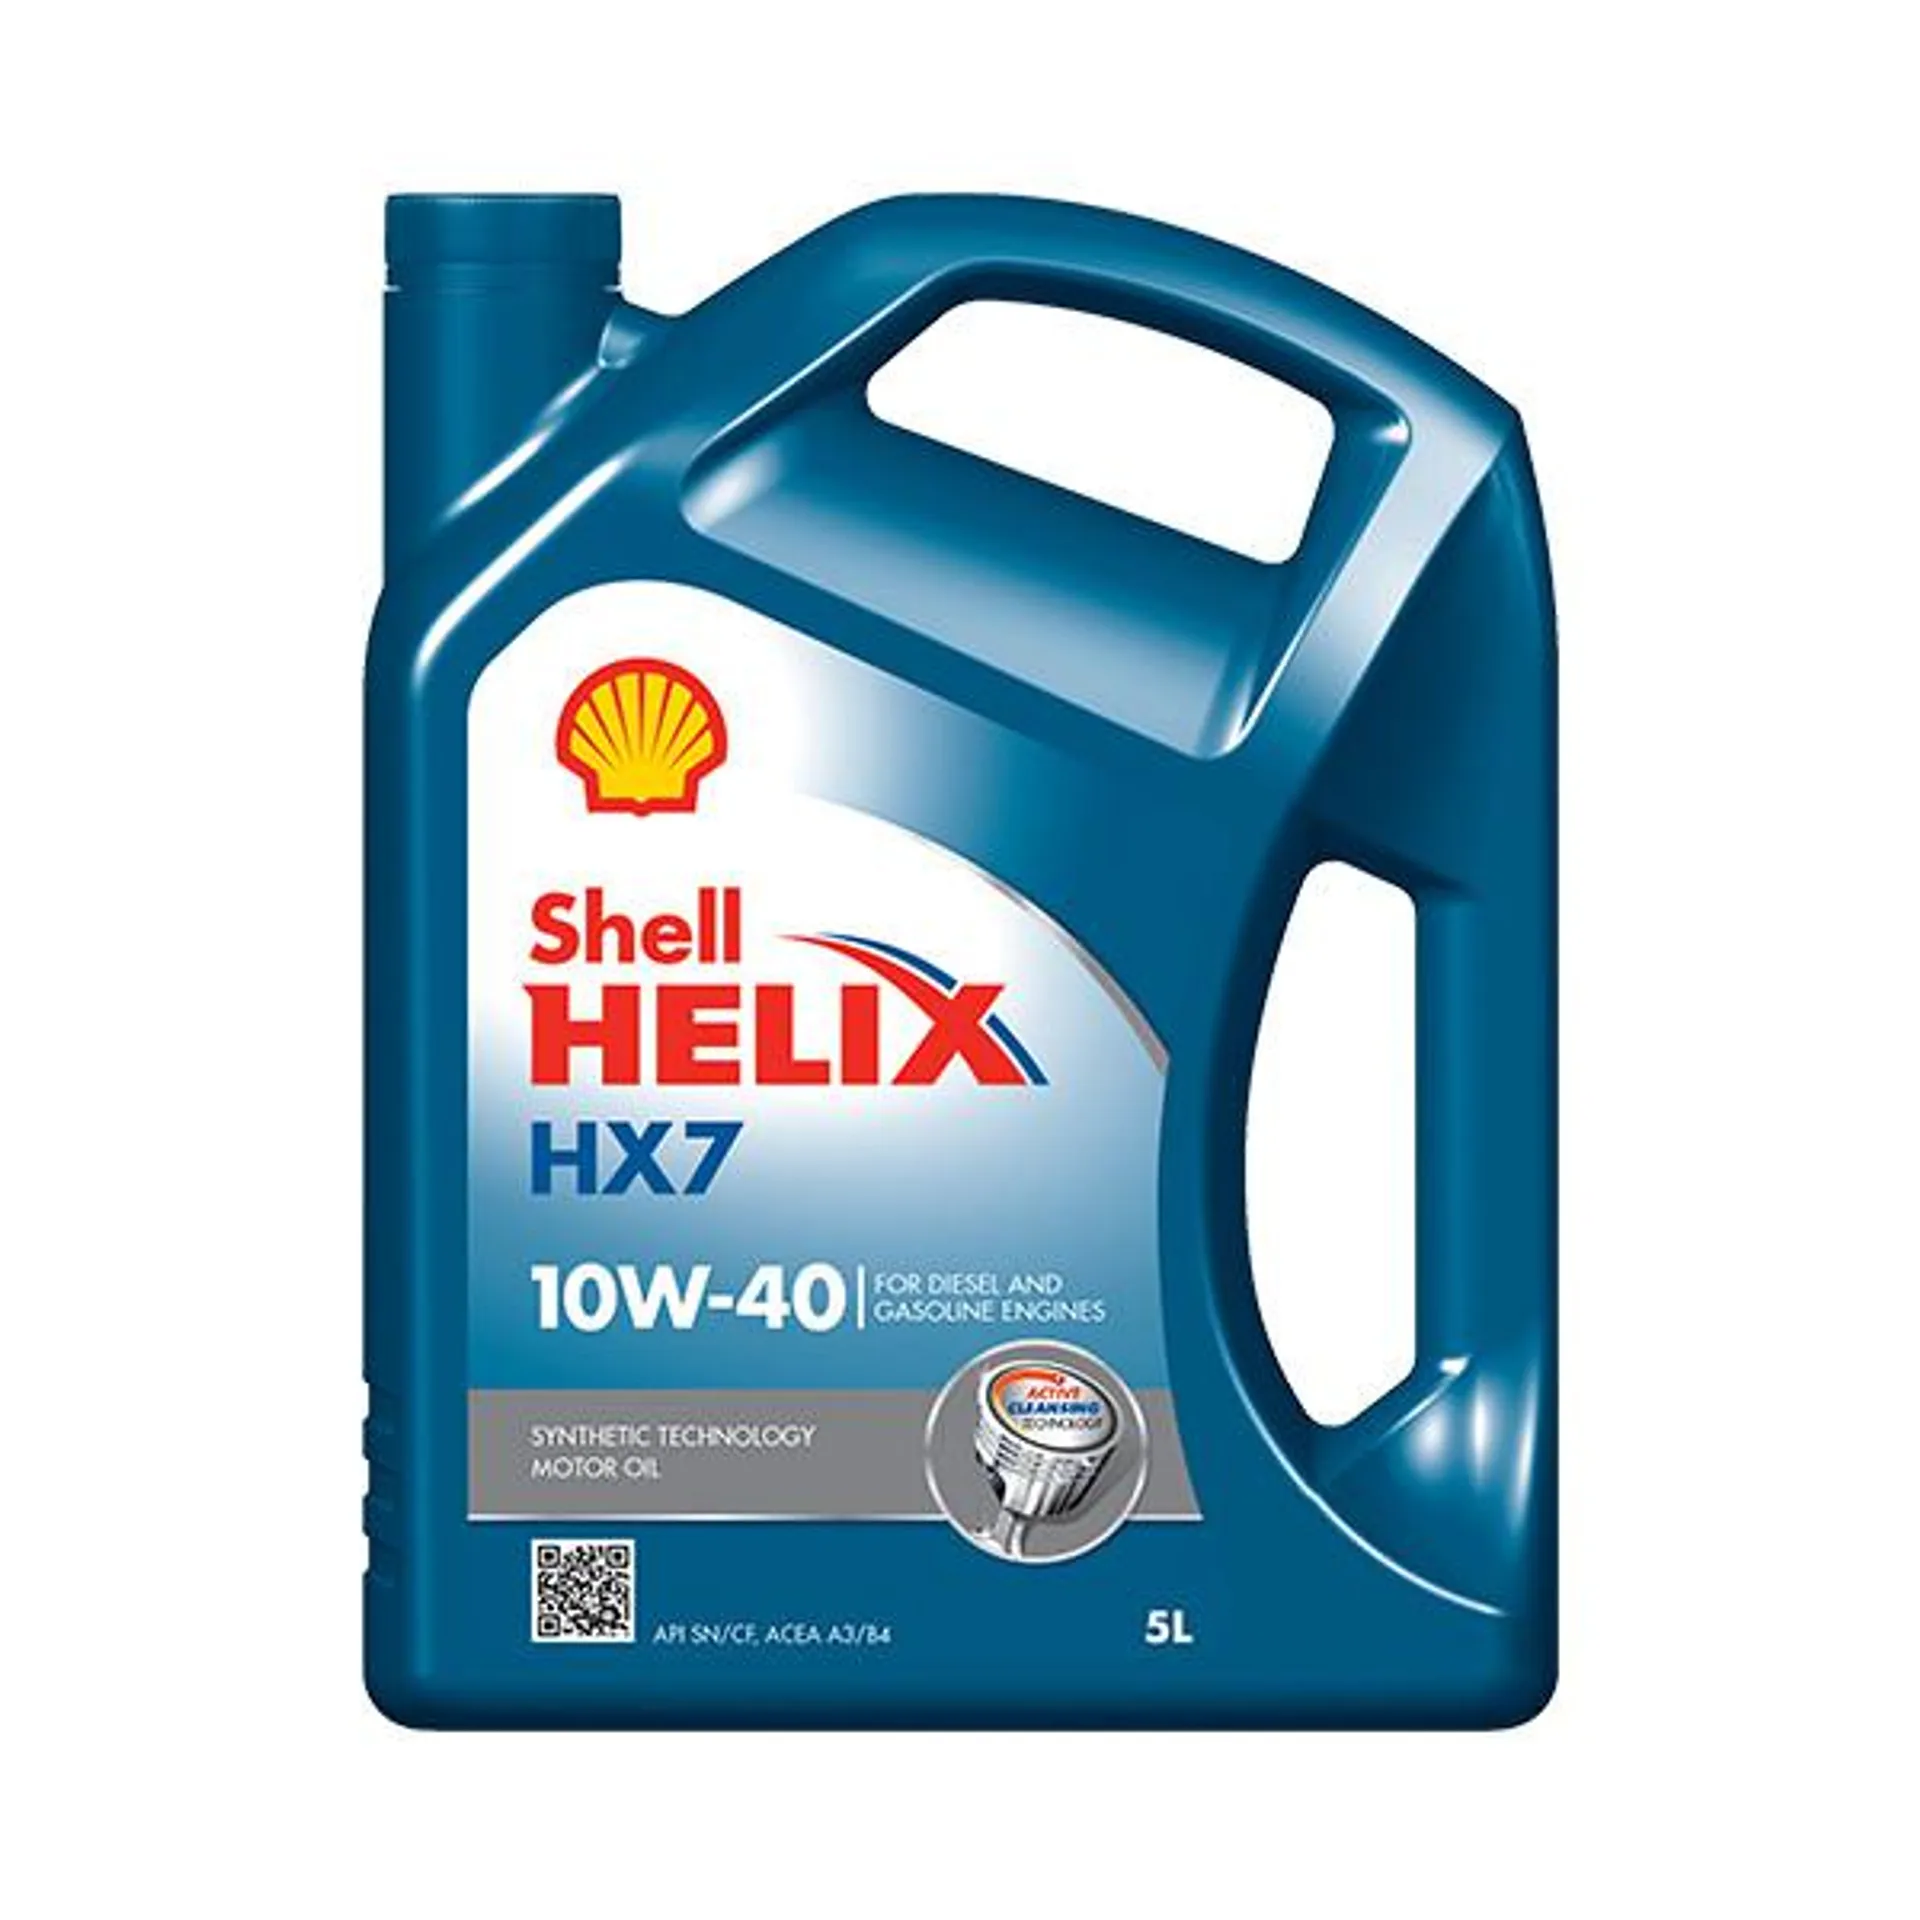 Shell Helix HX7 Engine Oil - 10W-40 - 5Ltr